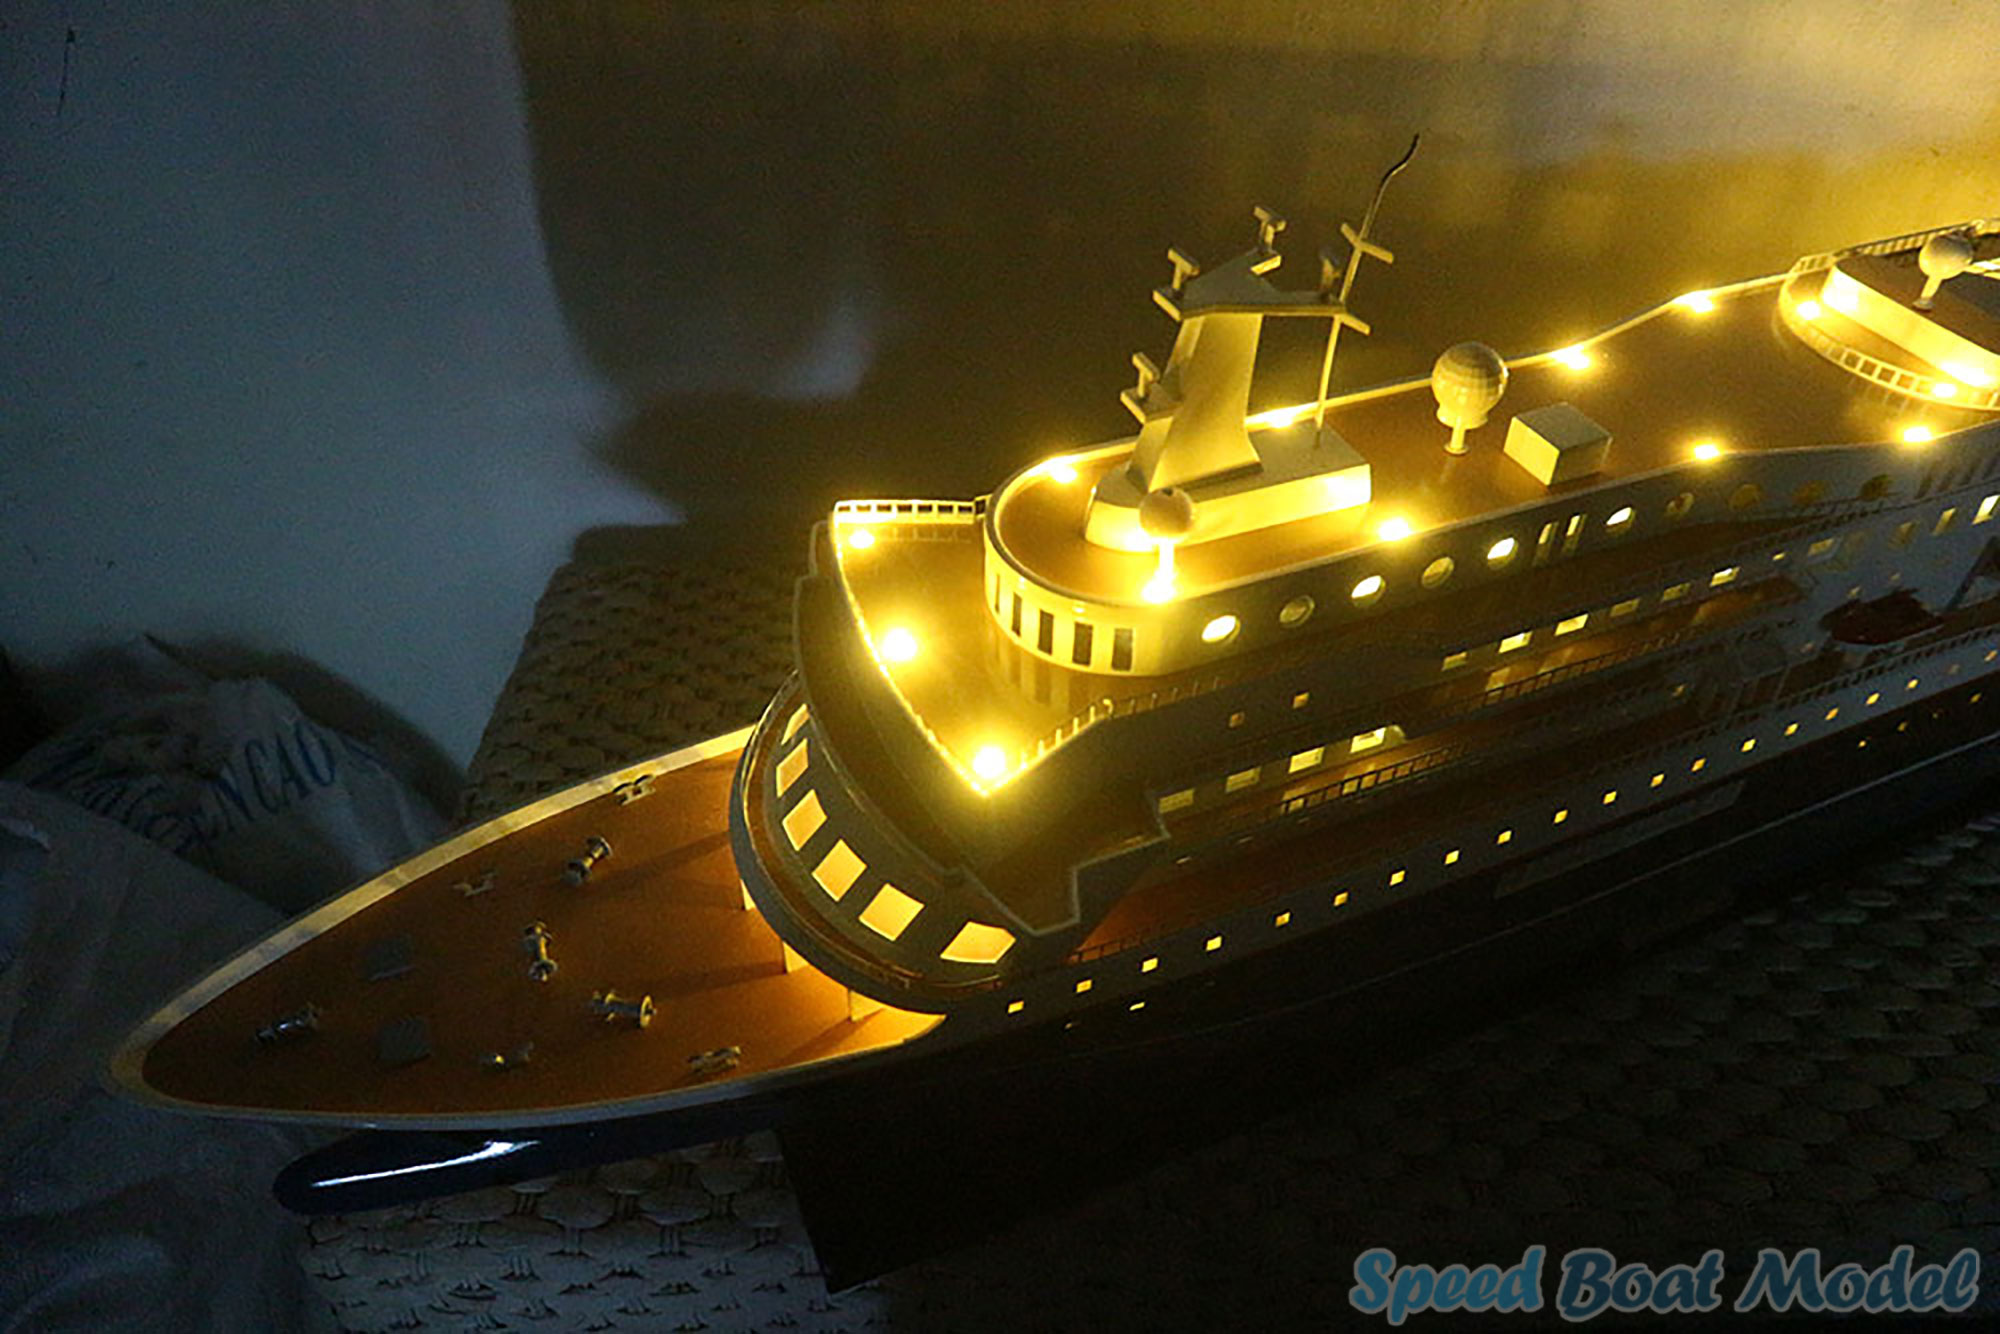 Nippon Maru Boat Model With Light 39.3"